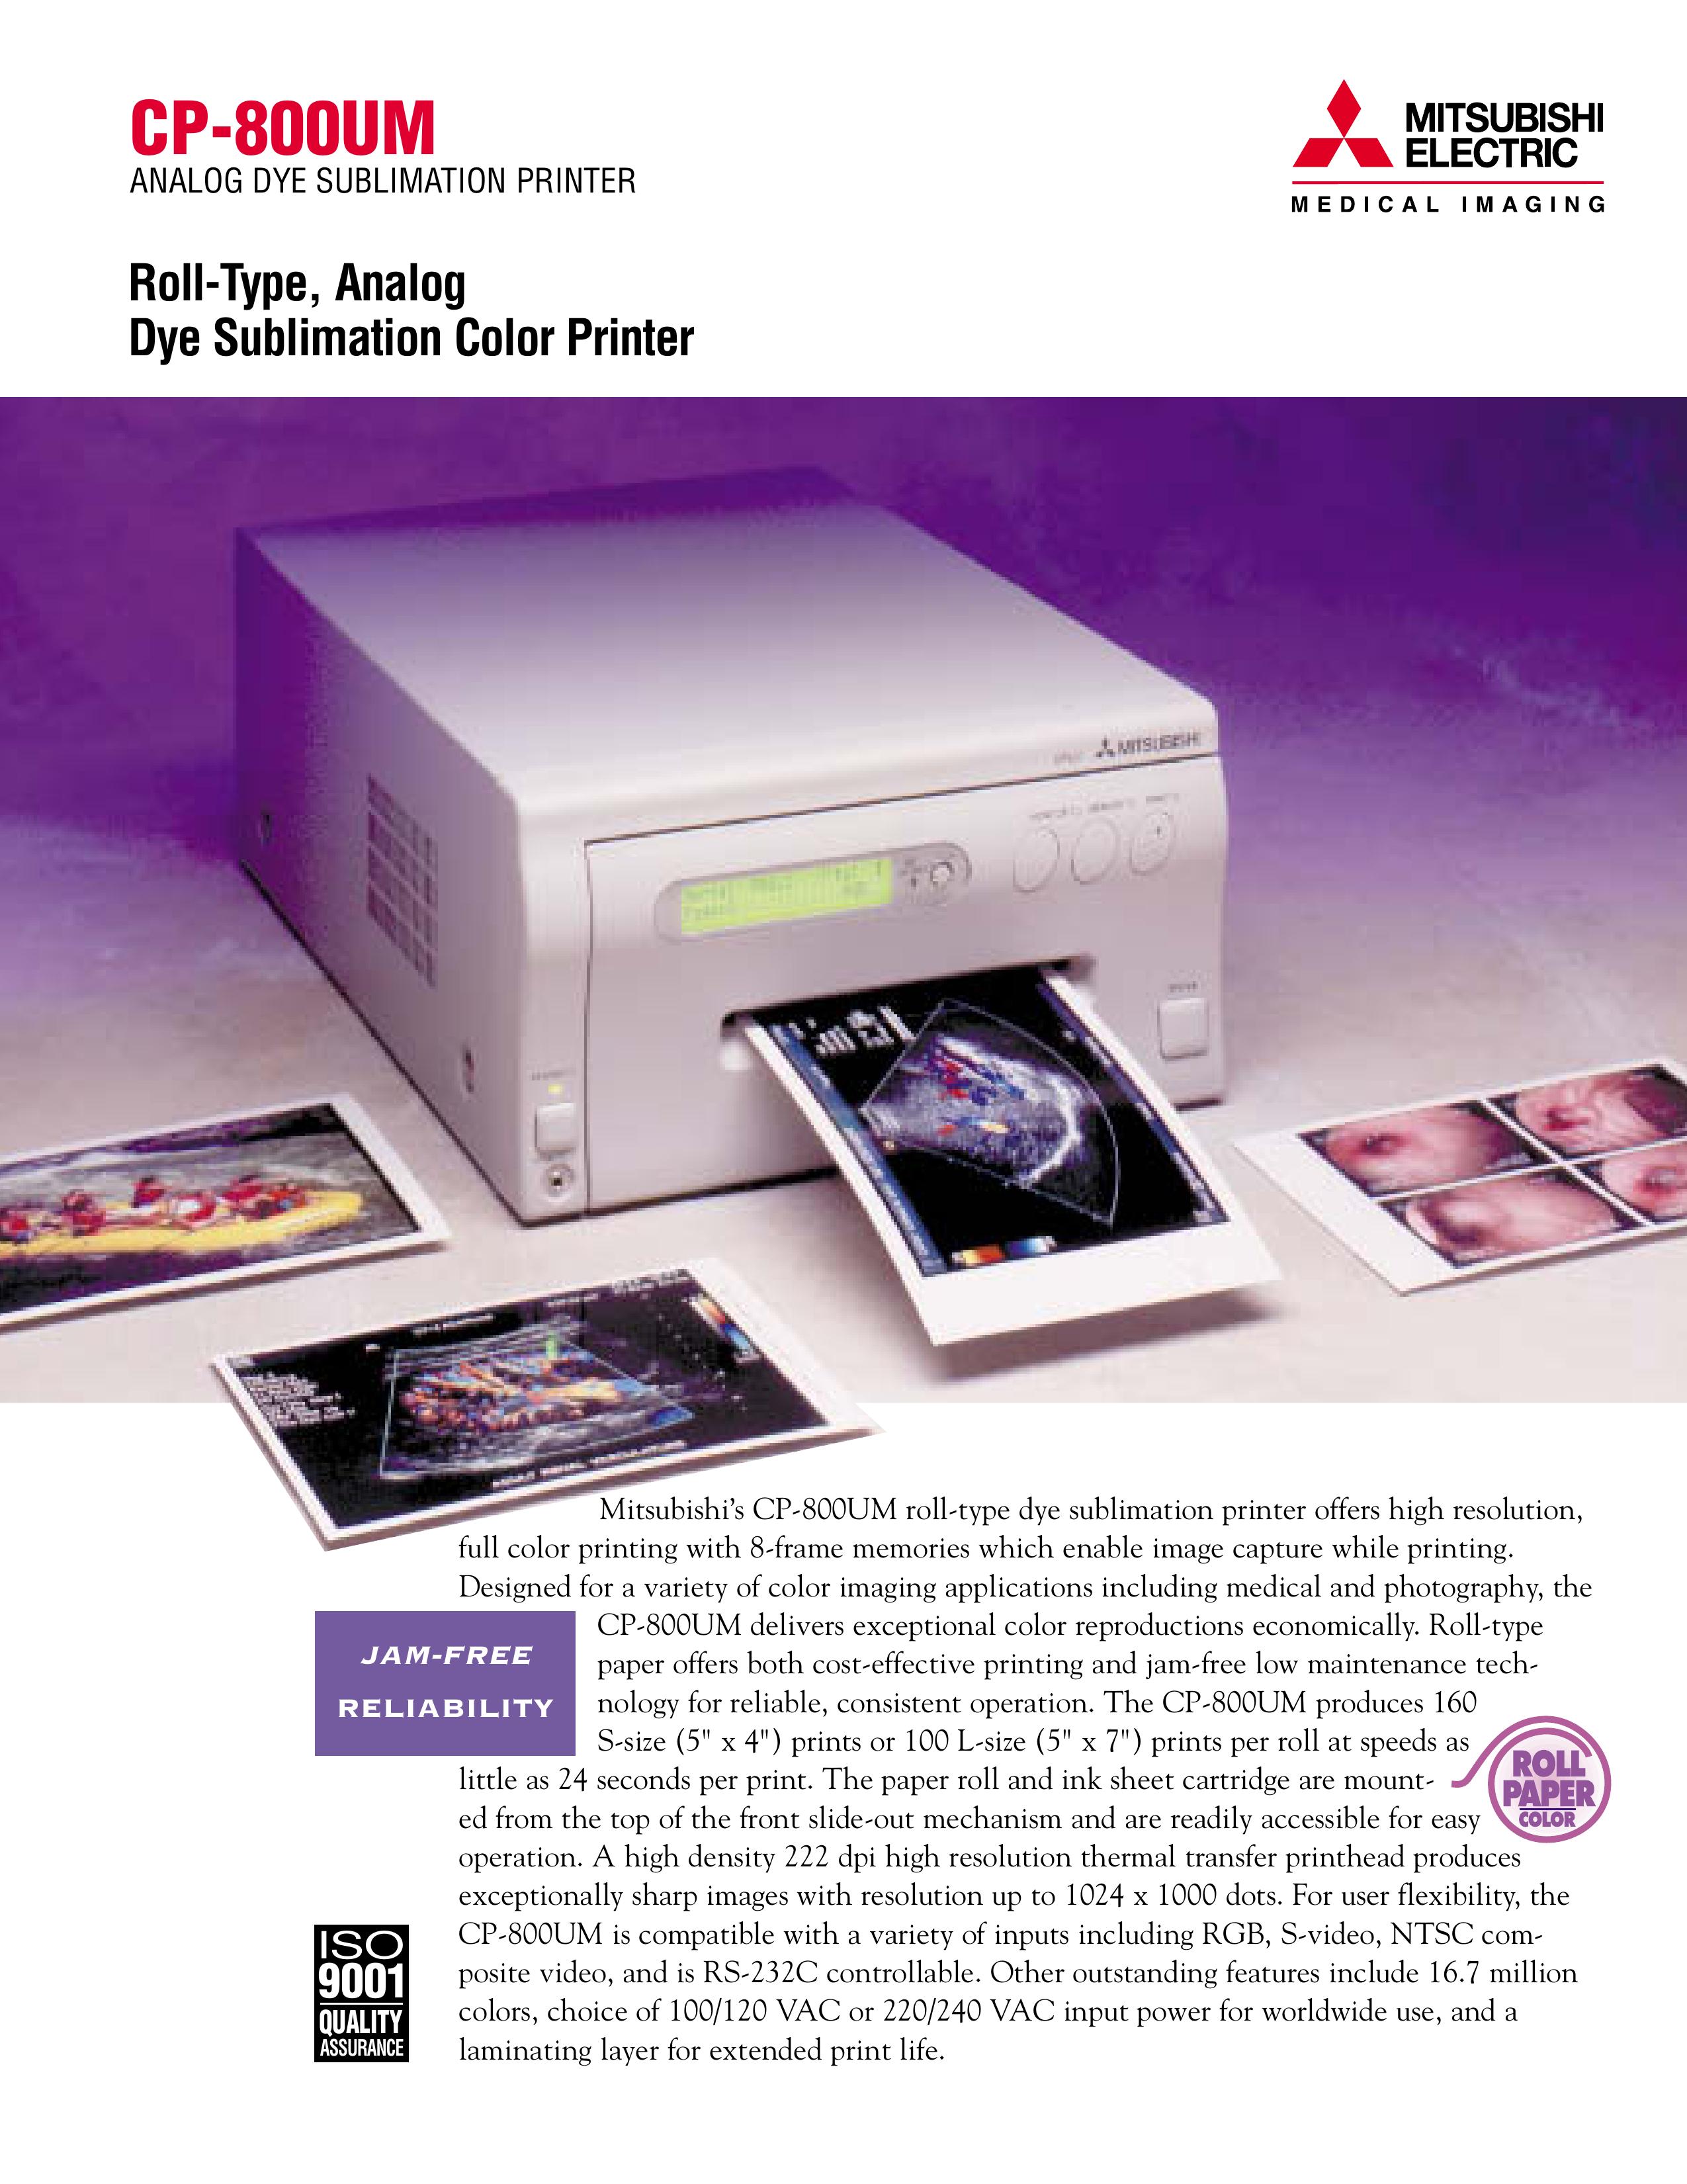 Mitsubishi Electronics CP-800UM Photo Printer User Manual